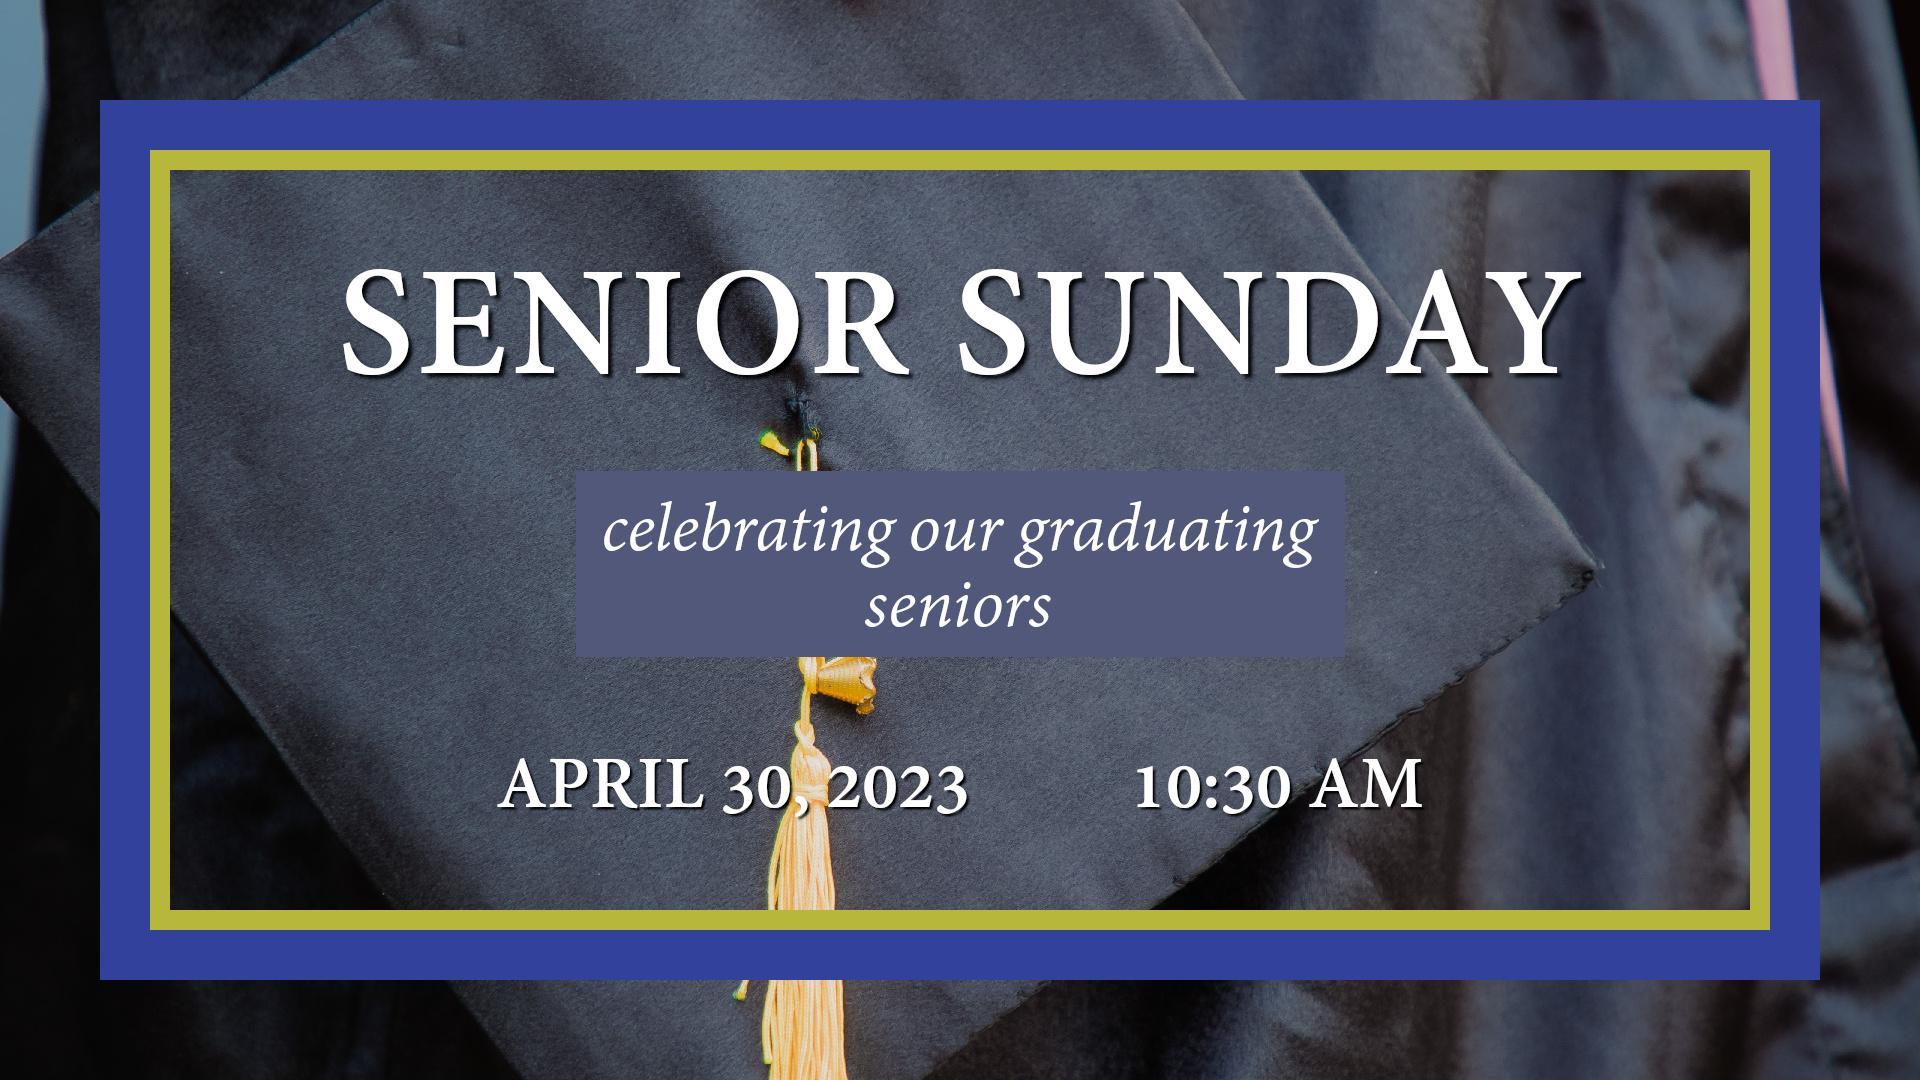 Senior Sunday celebrating our graduating seniors April 30, 2023